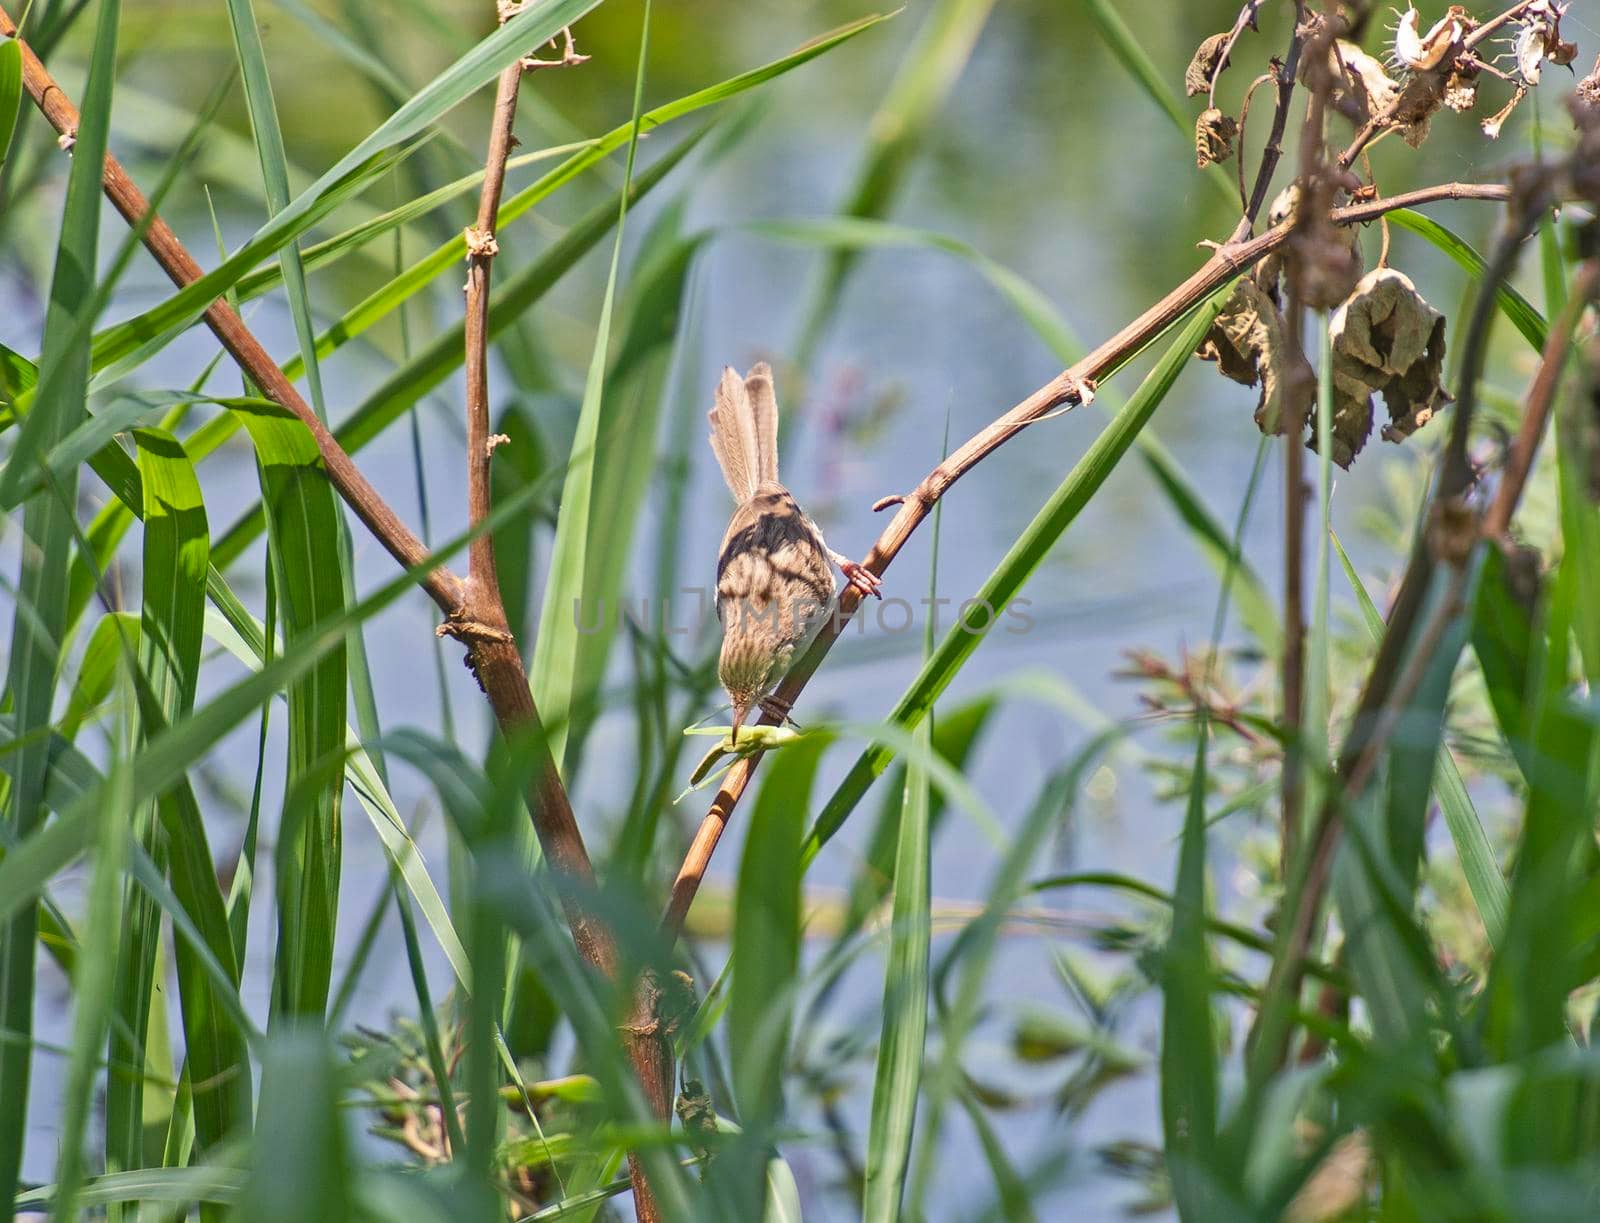 Eurasian reed warbler acrocephalus scirpaceus stood in grass reeds of river bank wetland feeding on grasshopper